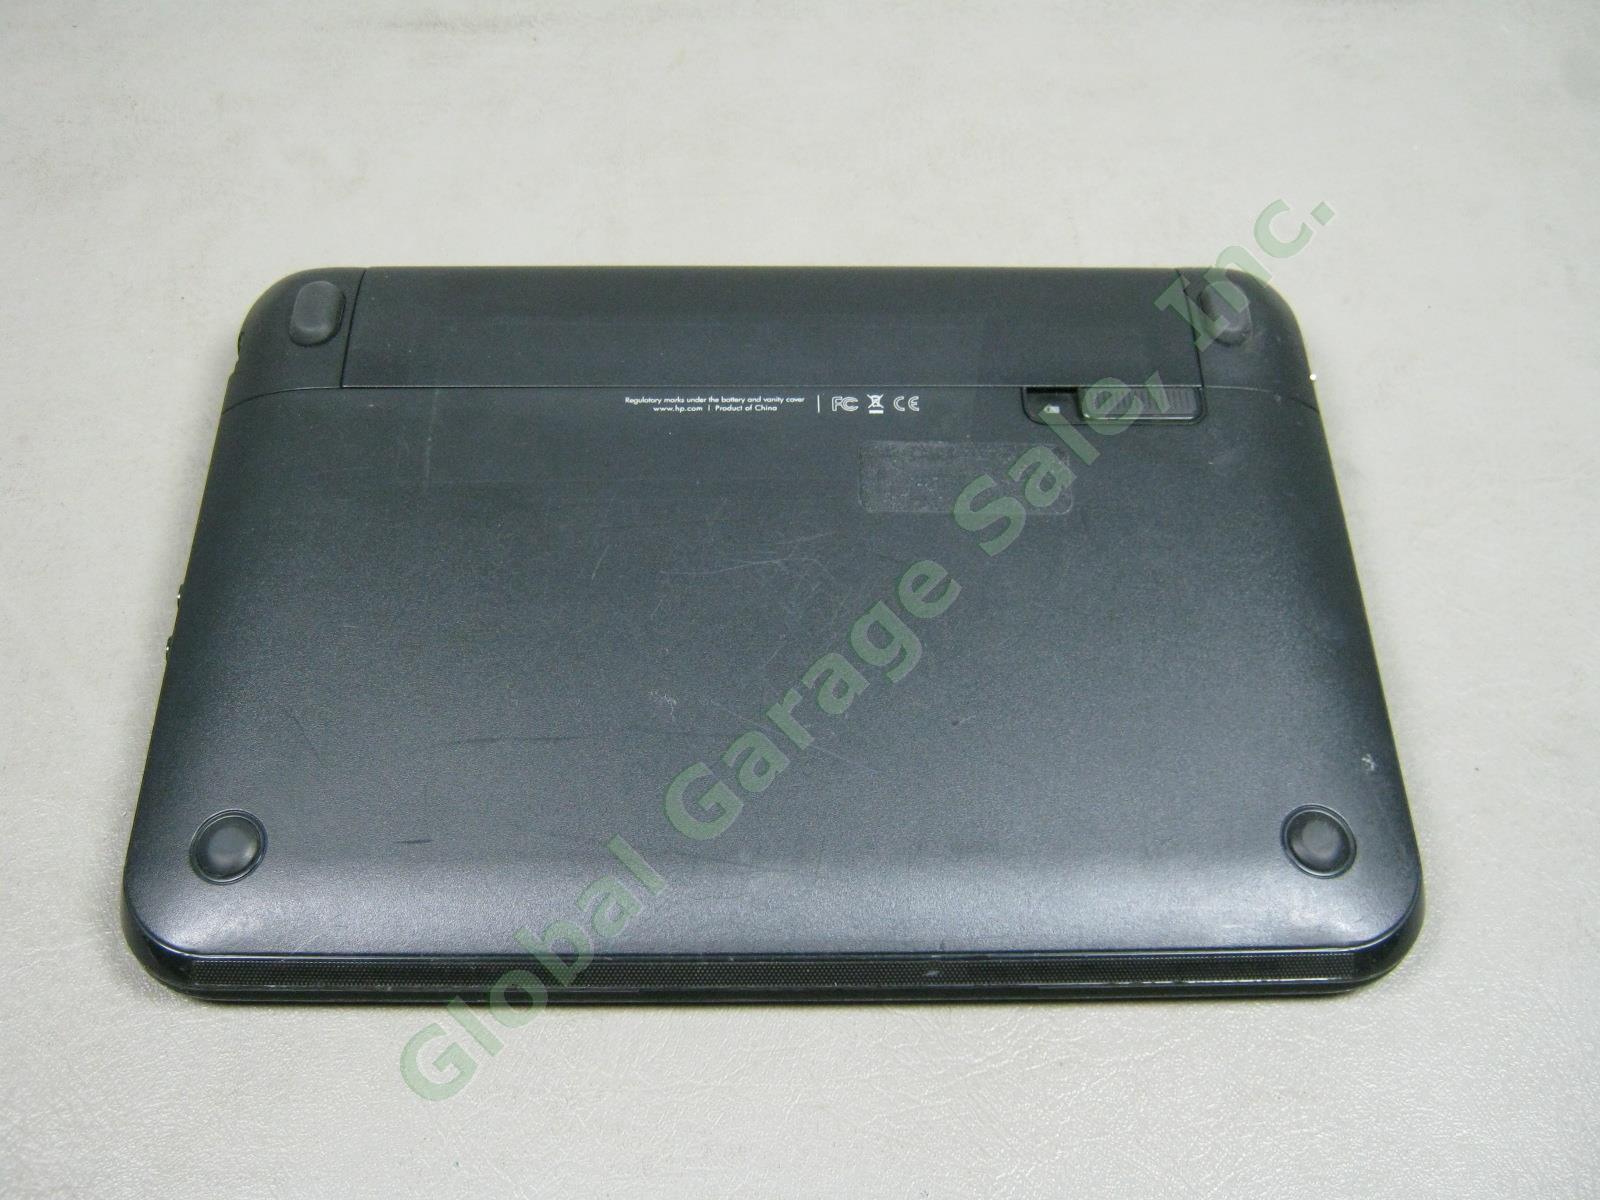 HP Mini 1104 10.1" Netbook Laptop Intel Atom N2600 1.6GHz 2GB RAM 320GB HDD Win7 6